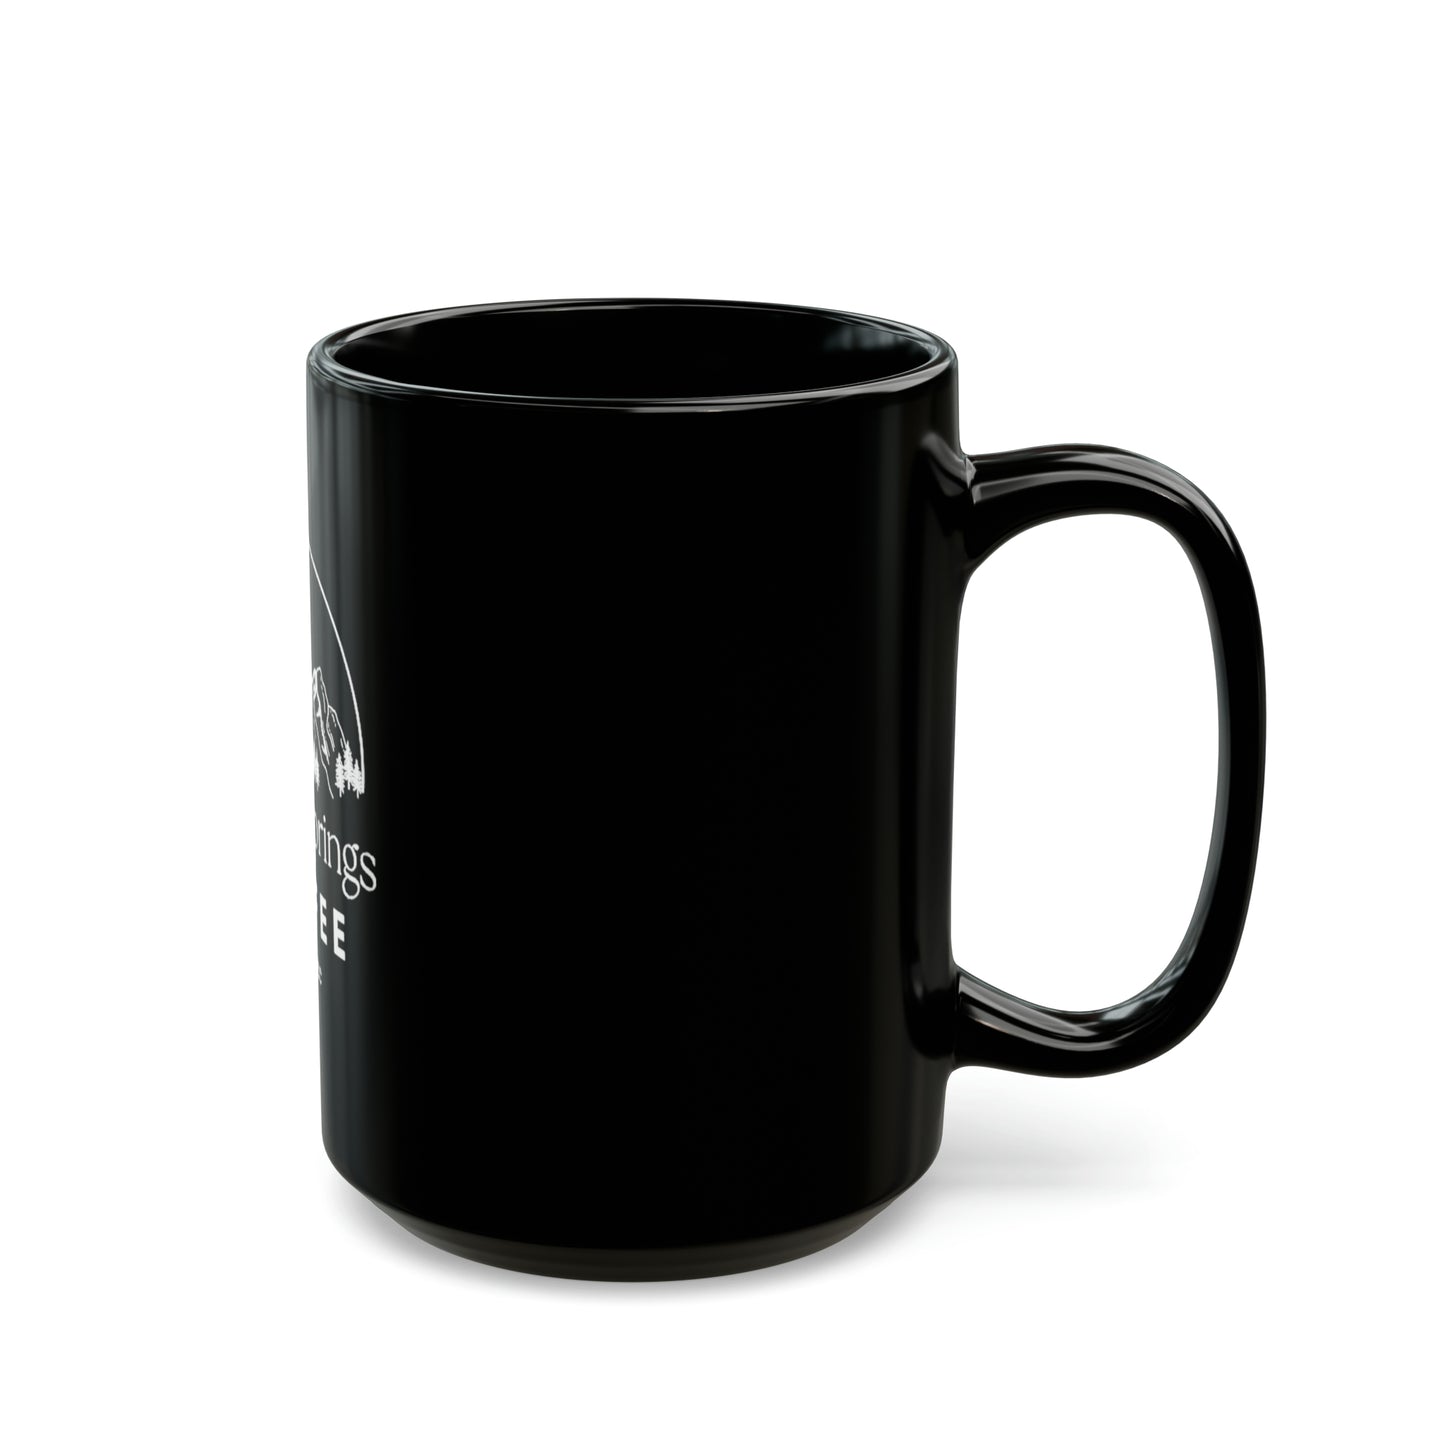 Rocky Springs Coffee, Black Mug (15oz)